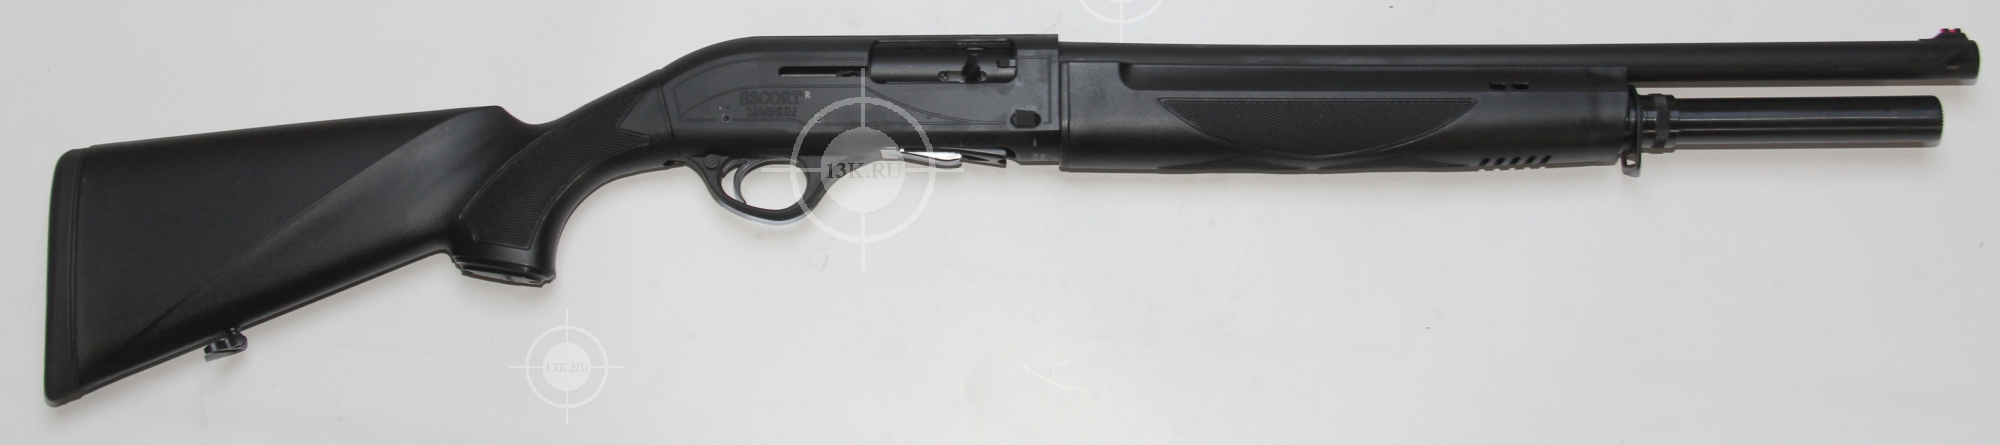 Hatsan Escort Ps Guard Pistol Grip